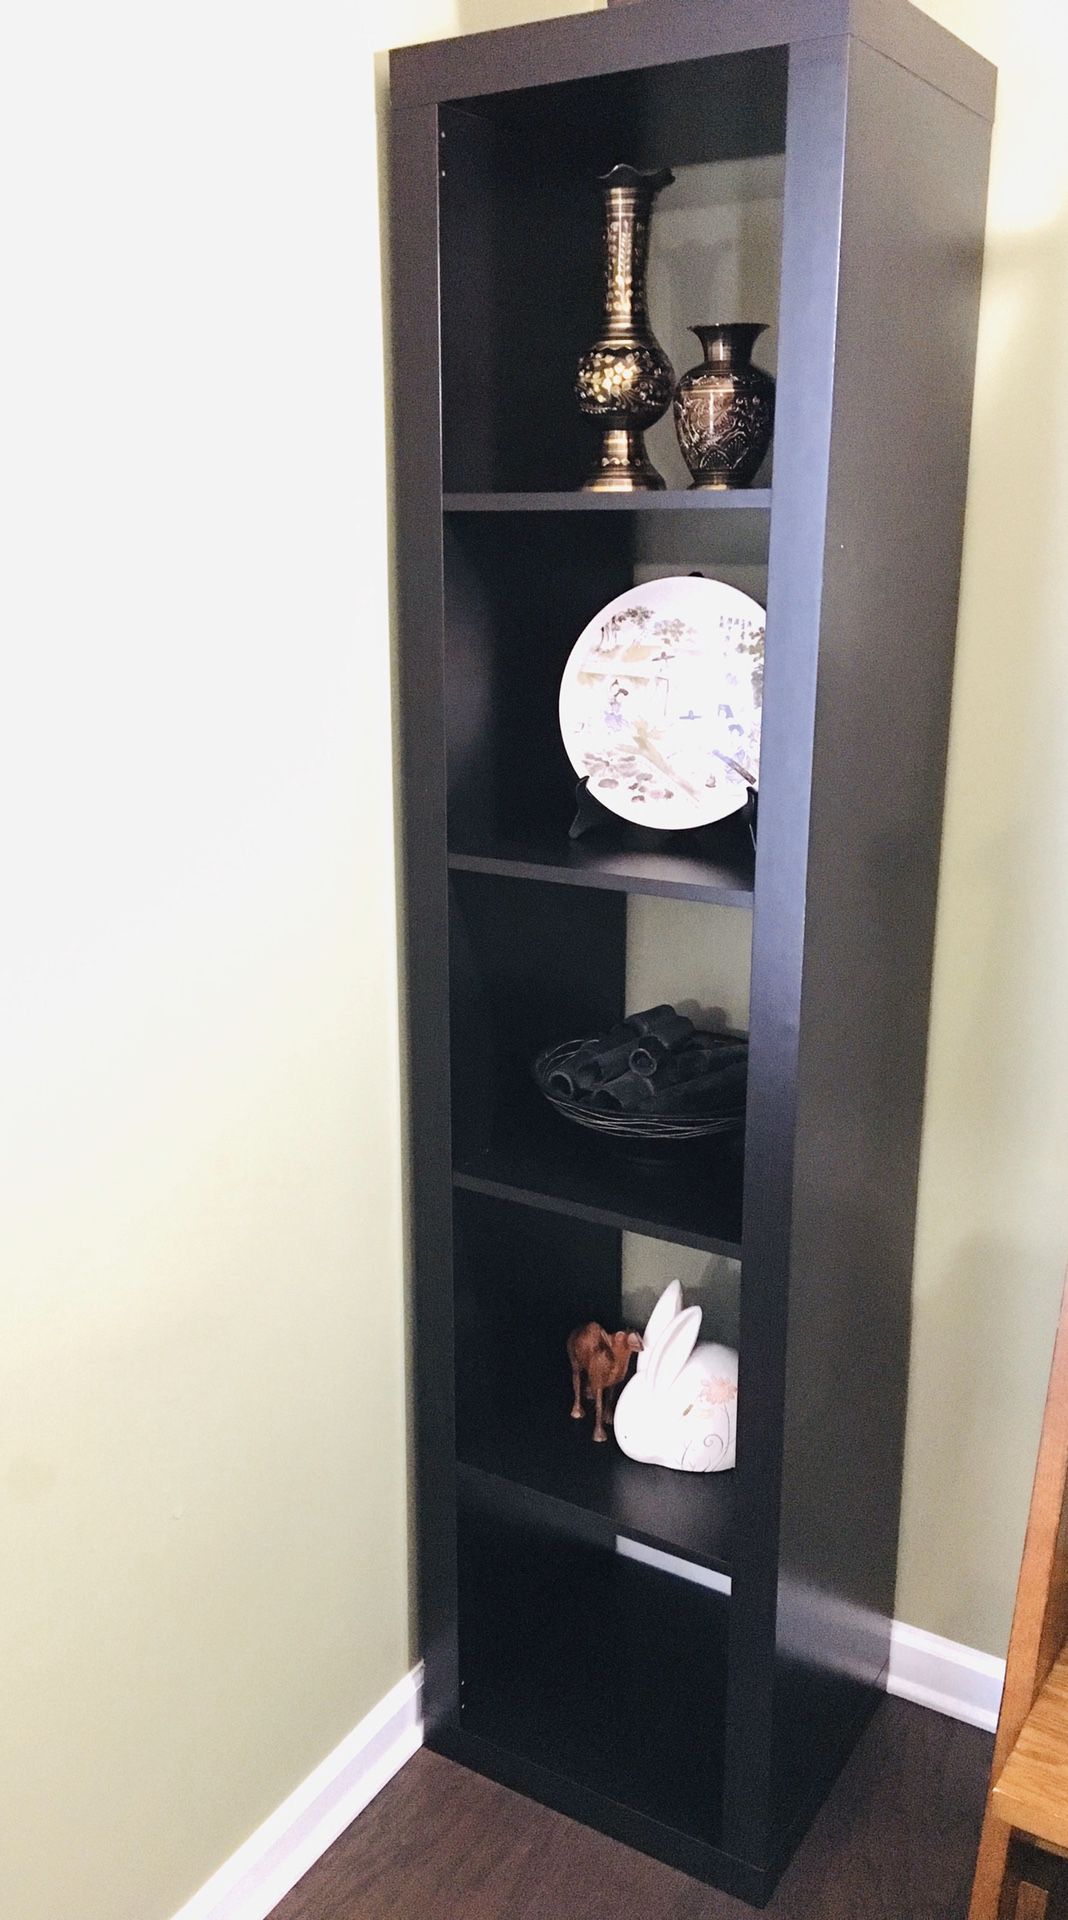 IKEA Bookcase/Shelving Unit